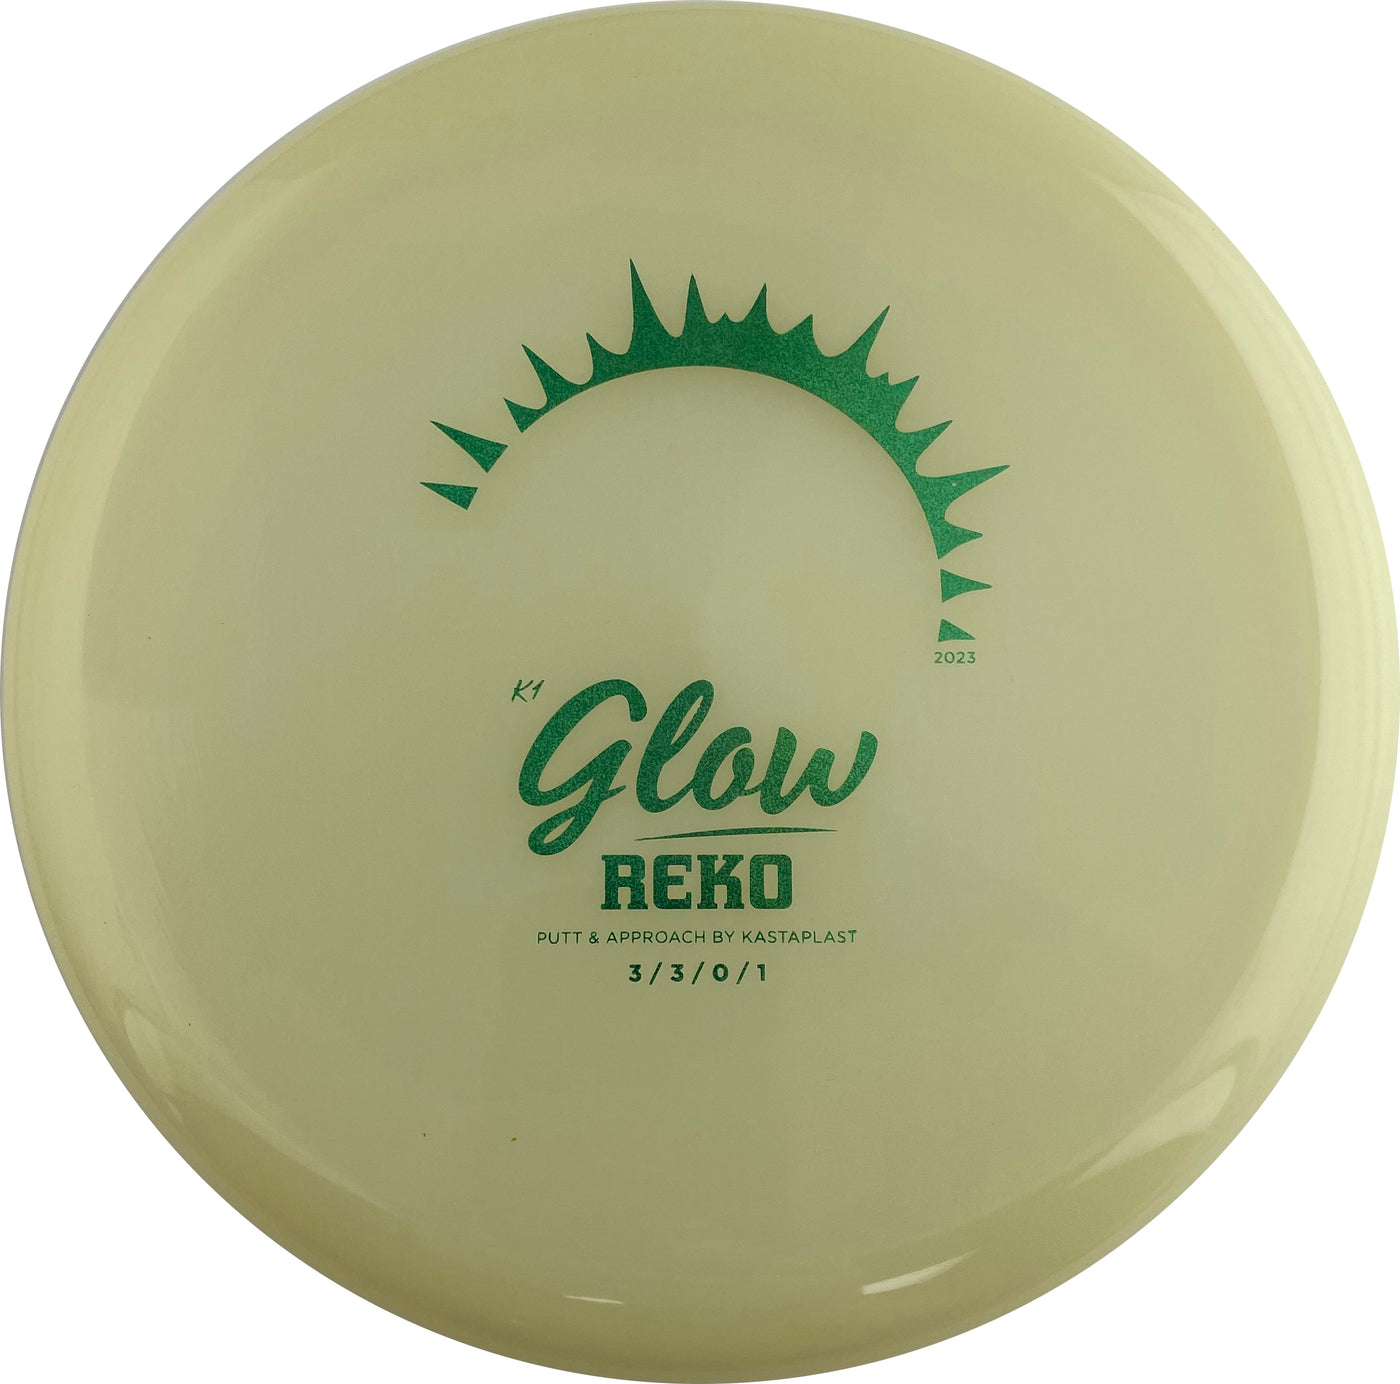 Kastaplast K1 Glow Reko Putter with 2023 - Full Glow Stamp - Speed 3